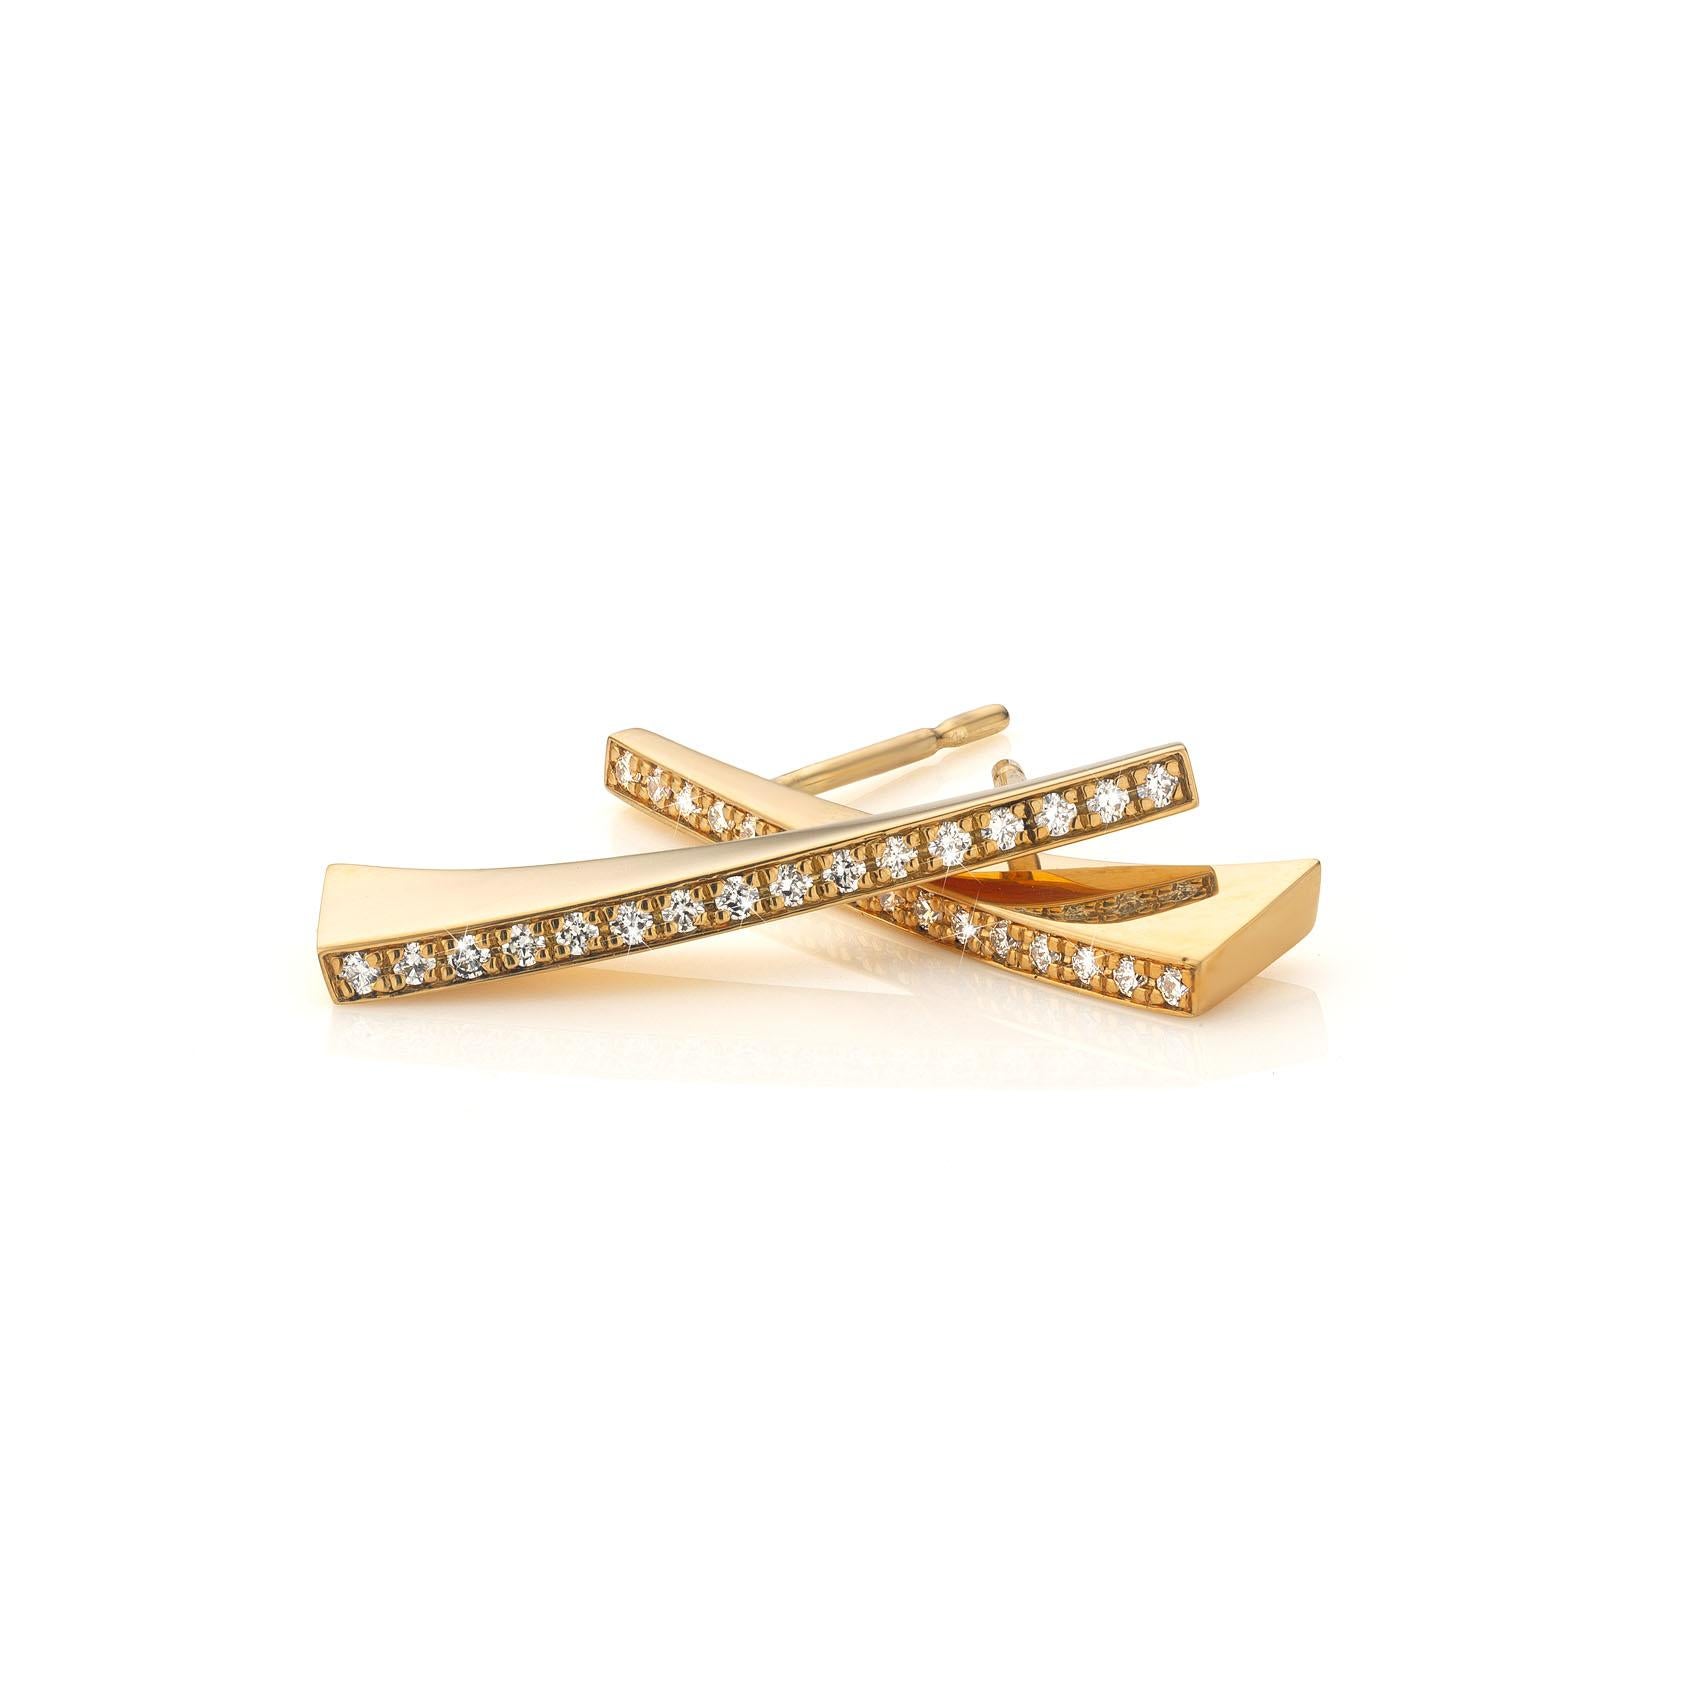 Brilliant Cut Cober total 32 brilliant-cut Diamonds of 0.01 Carat Yellow Gold Design Earrings For Sale